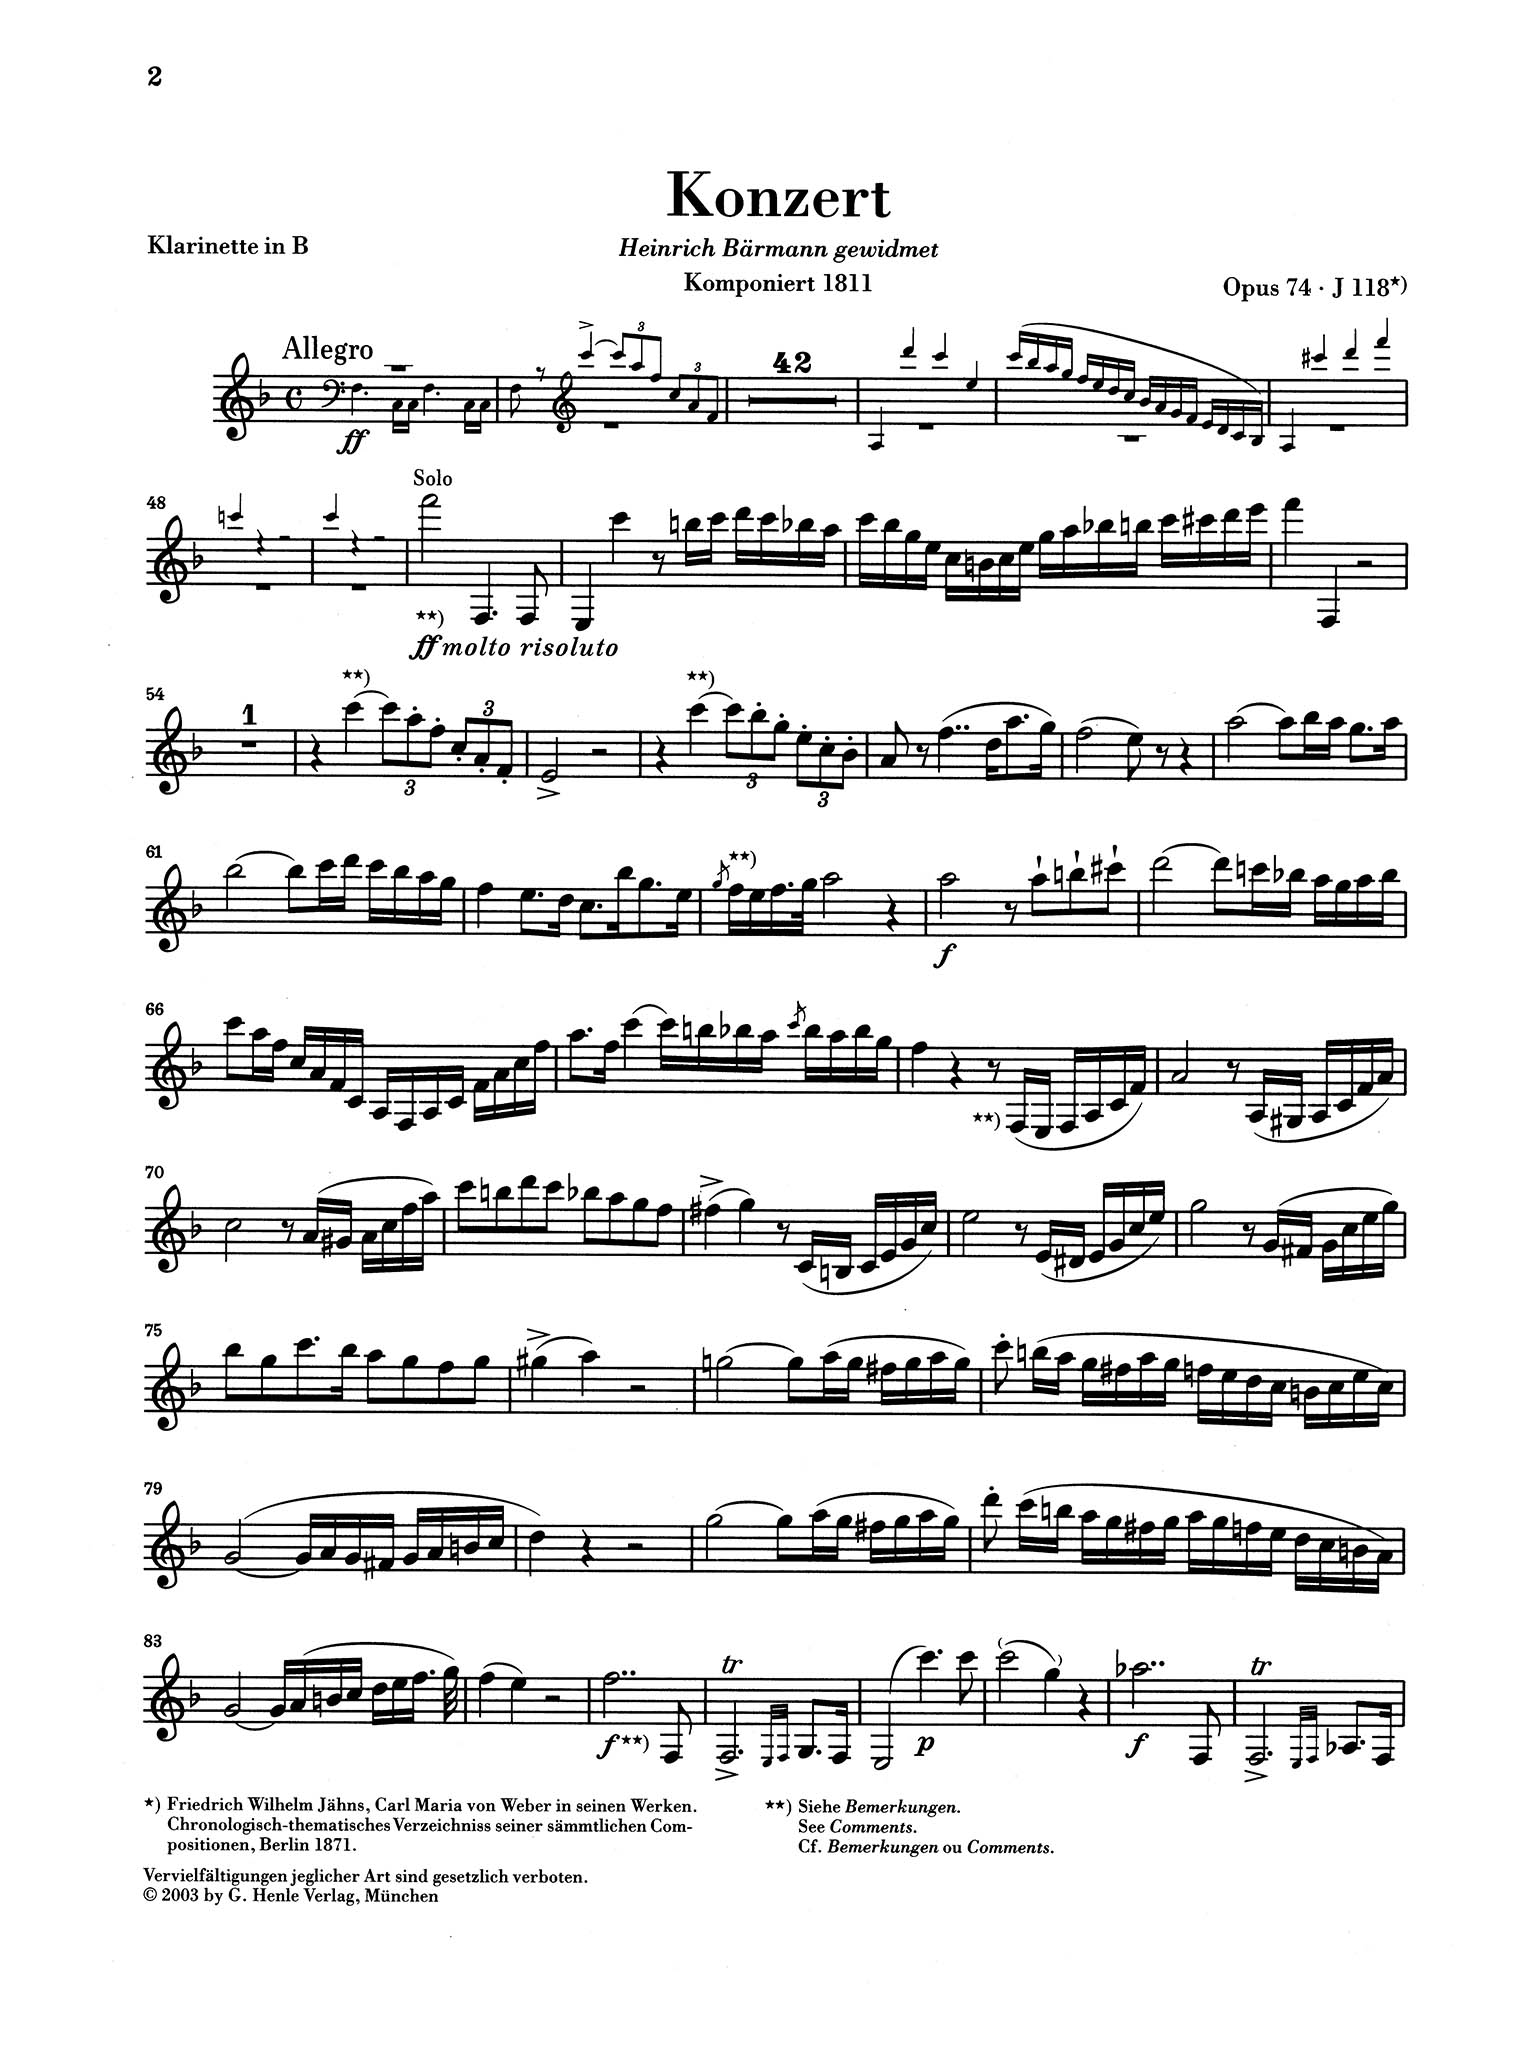 Clarinet Concerto No. 2 in E-flat Major, Op. 74 Clarinet part Urtext